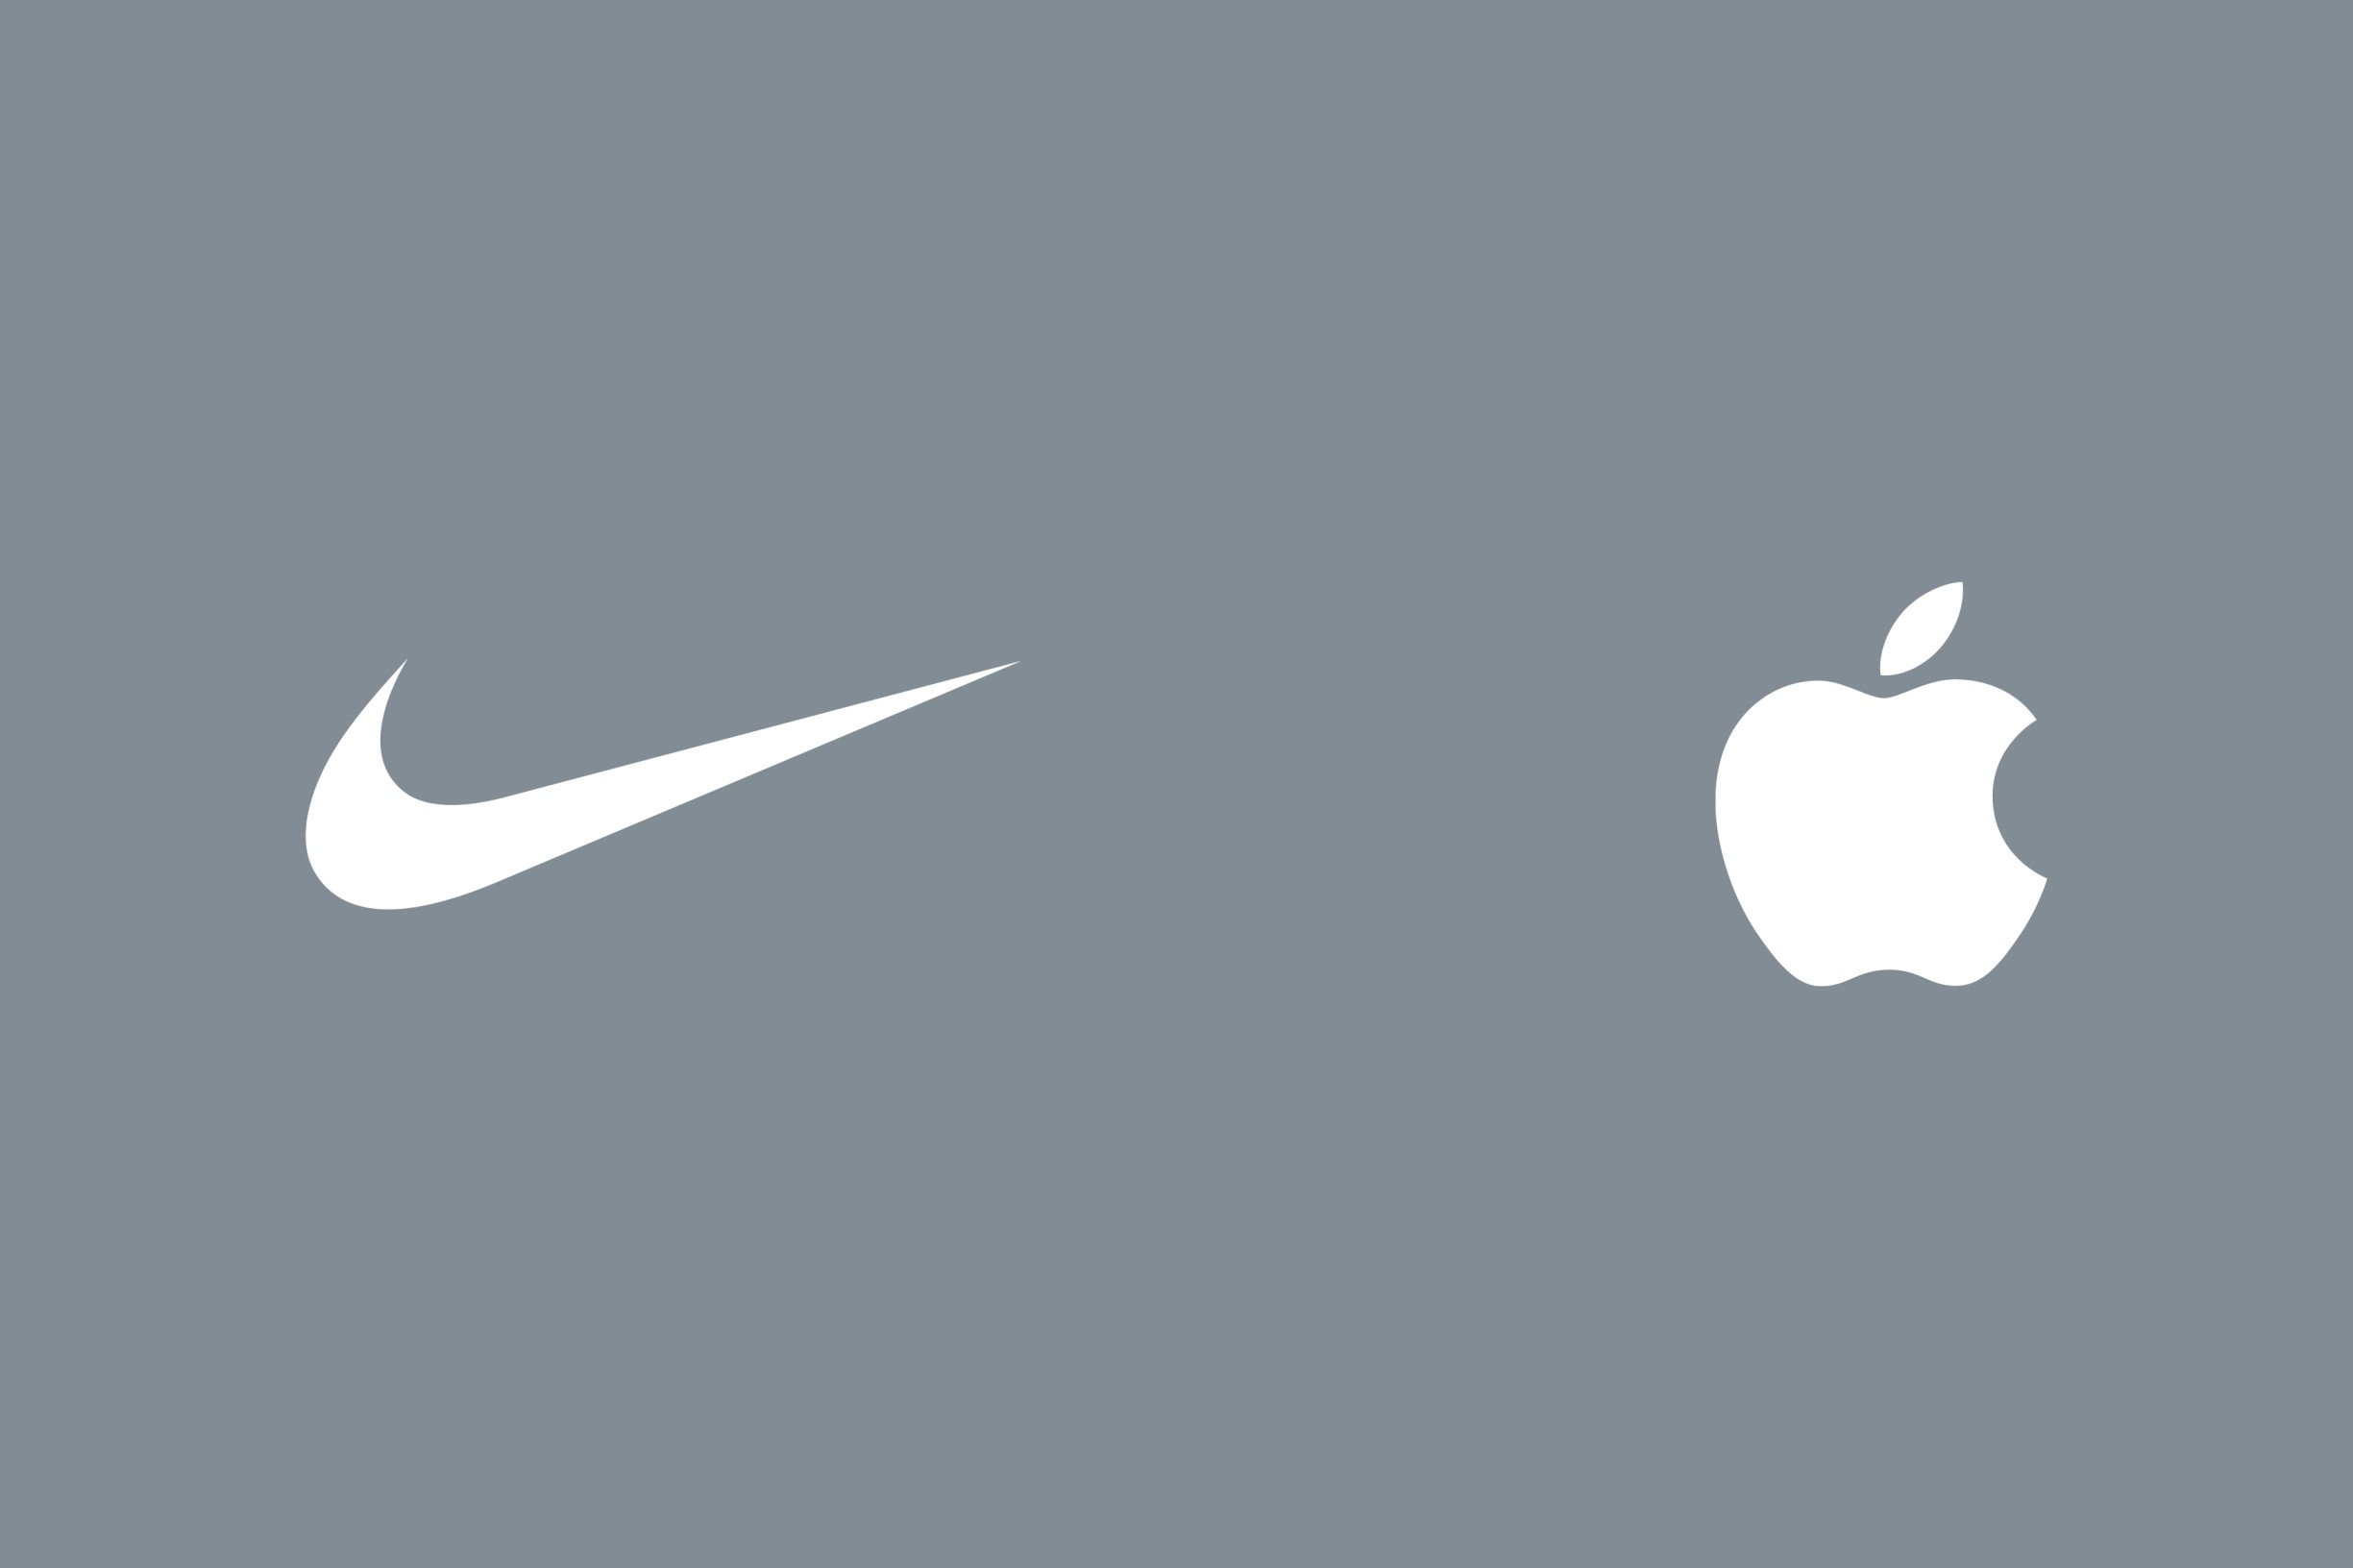 co branding nike and apple